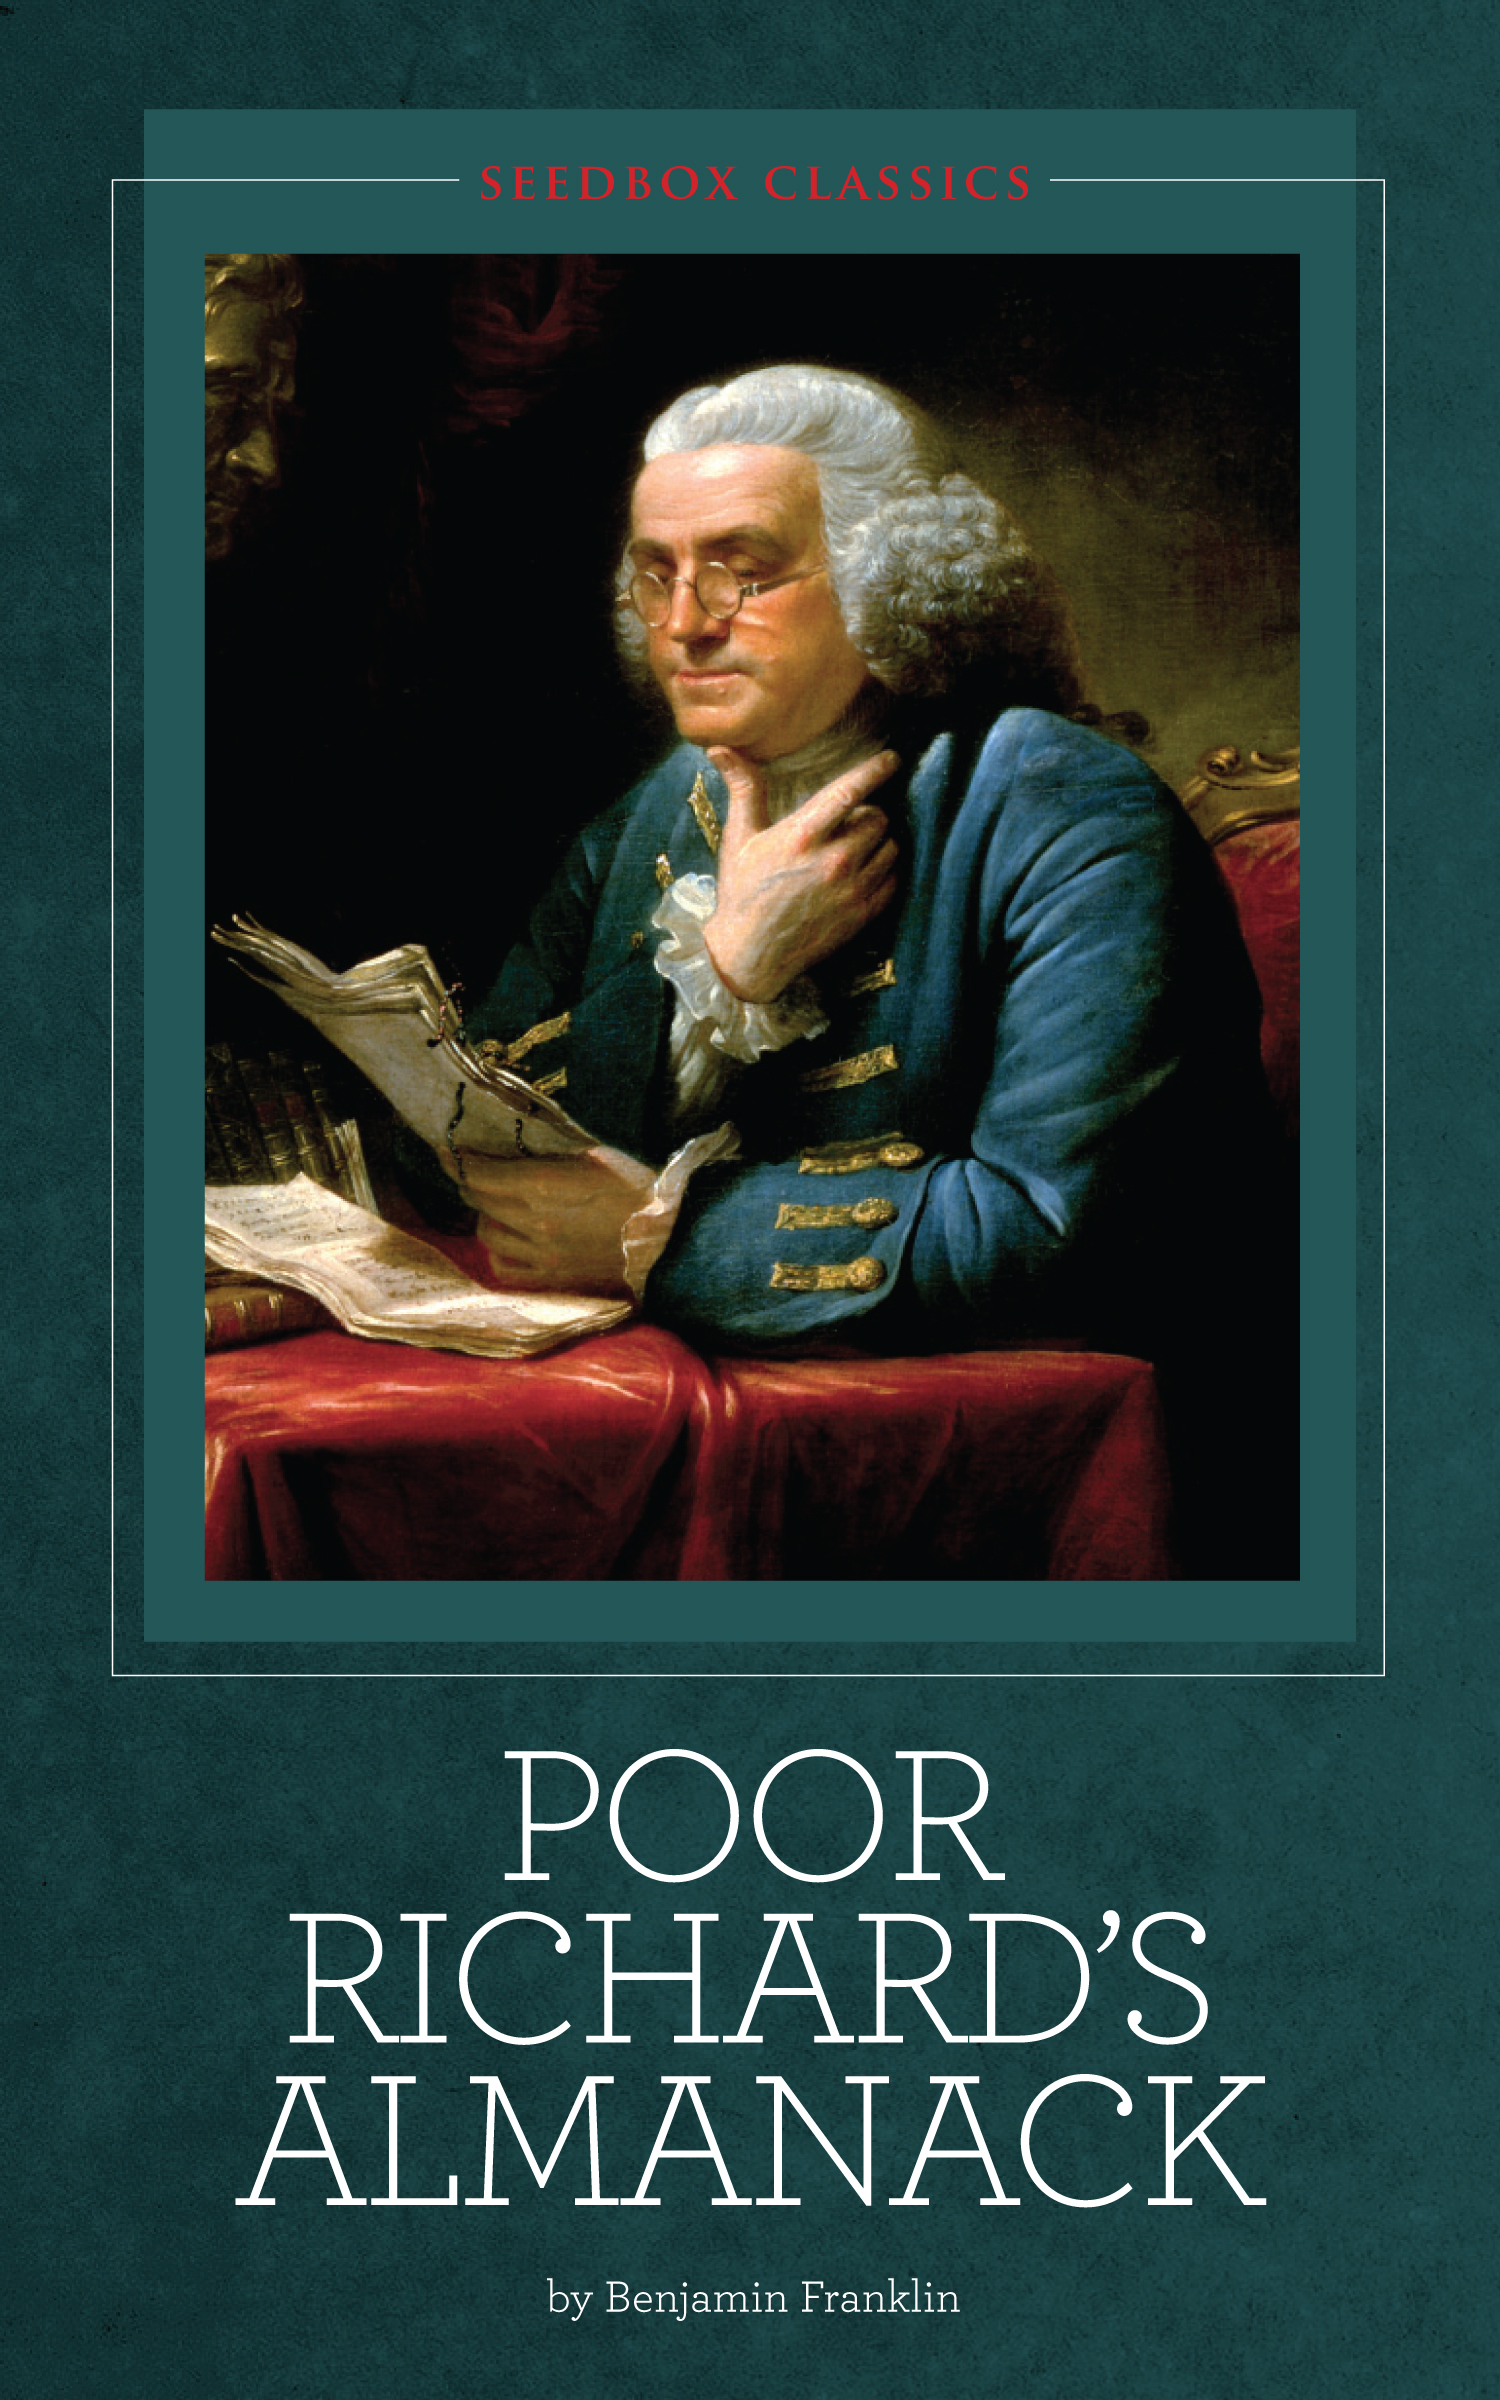 Poor Richard's Almanack by Benjamin Franklin Seedbox Press Seedbox